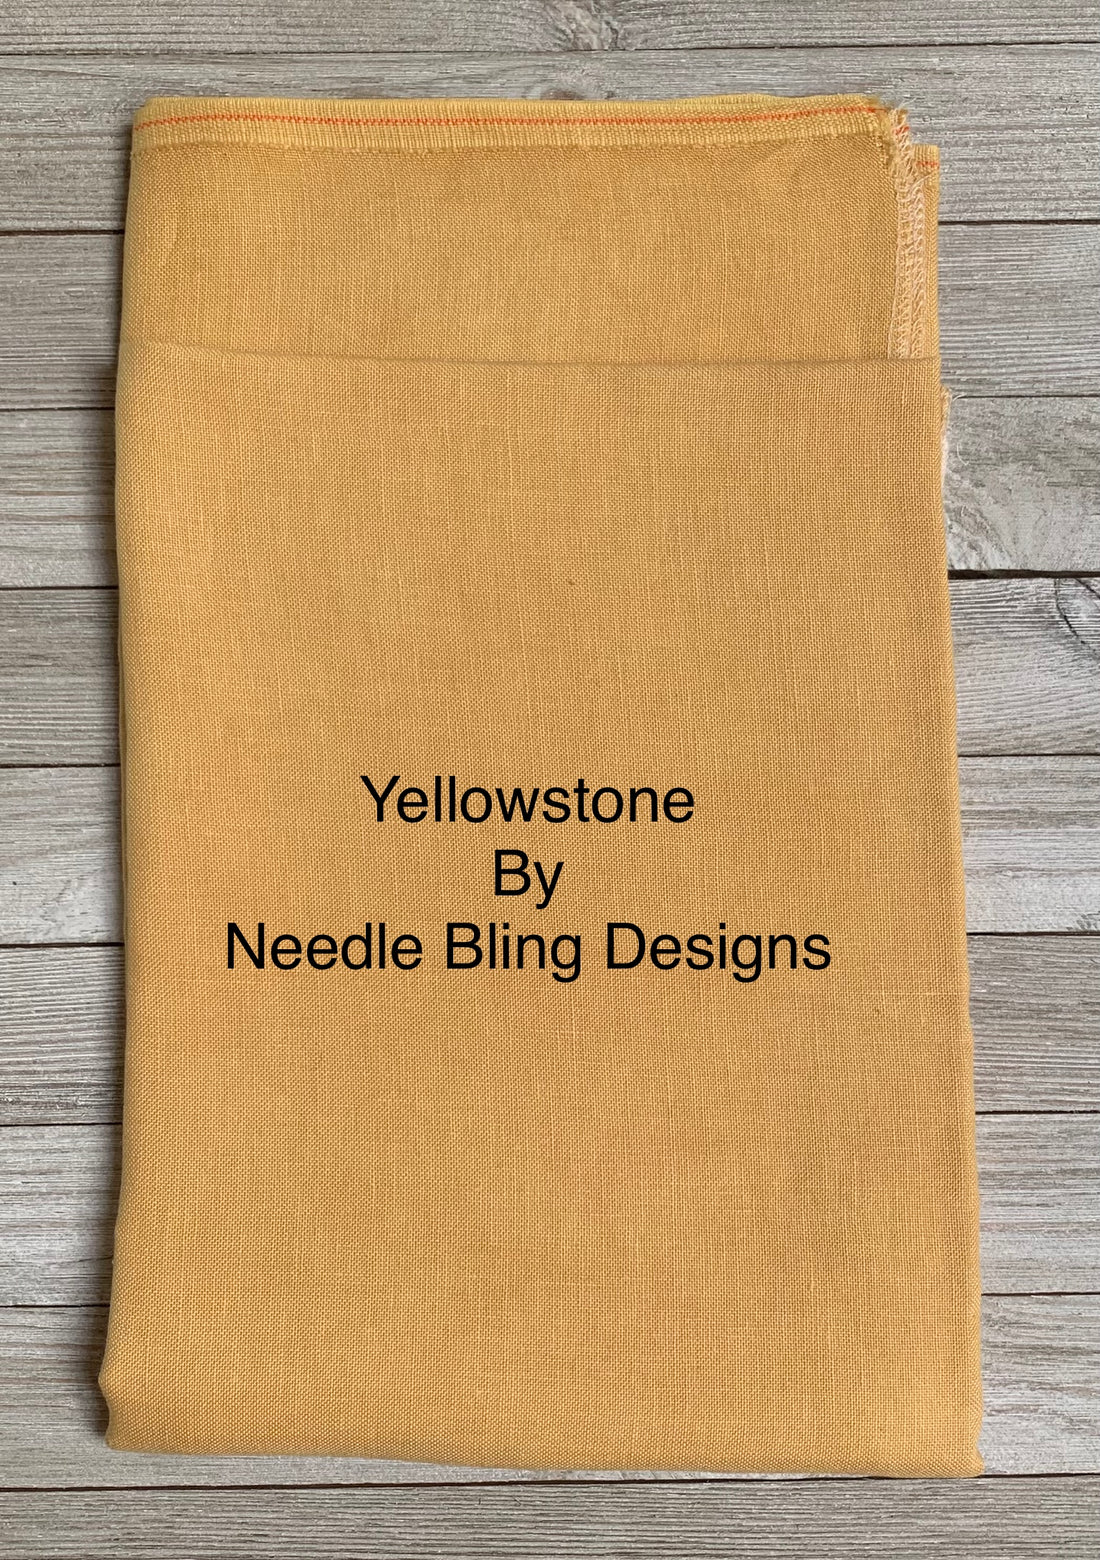 36 ct Linen "Yellowstone" - Needle Bling Designs - Cross Stitch Fabric